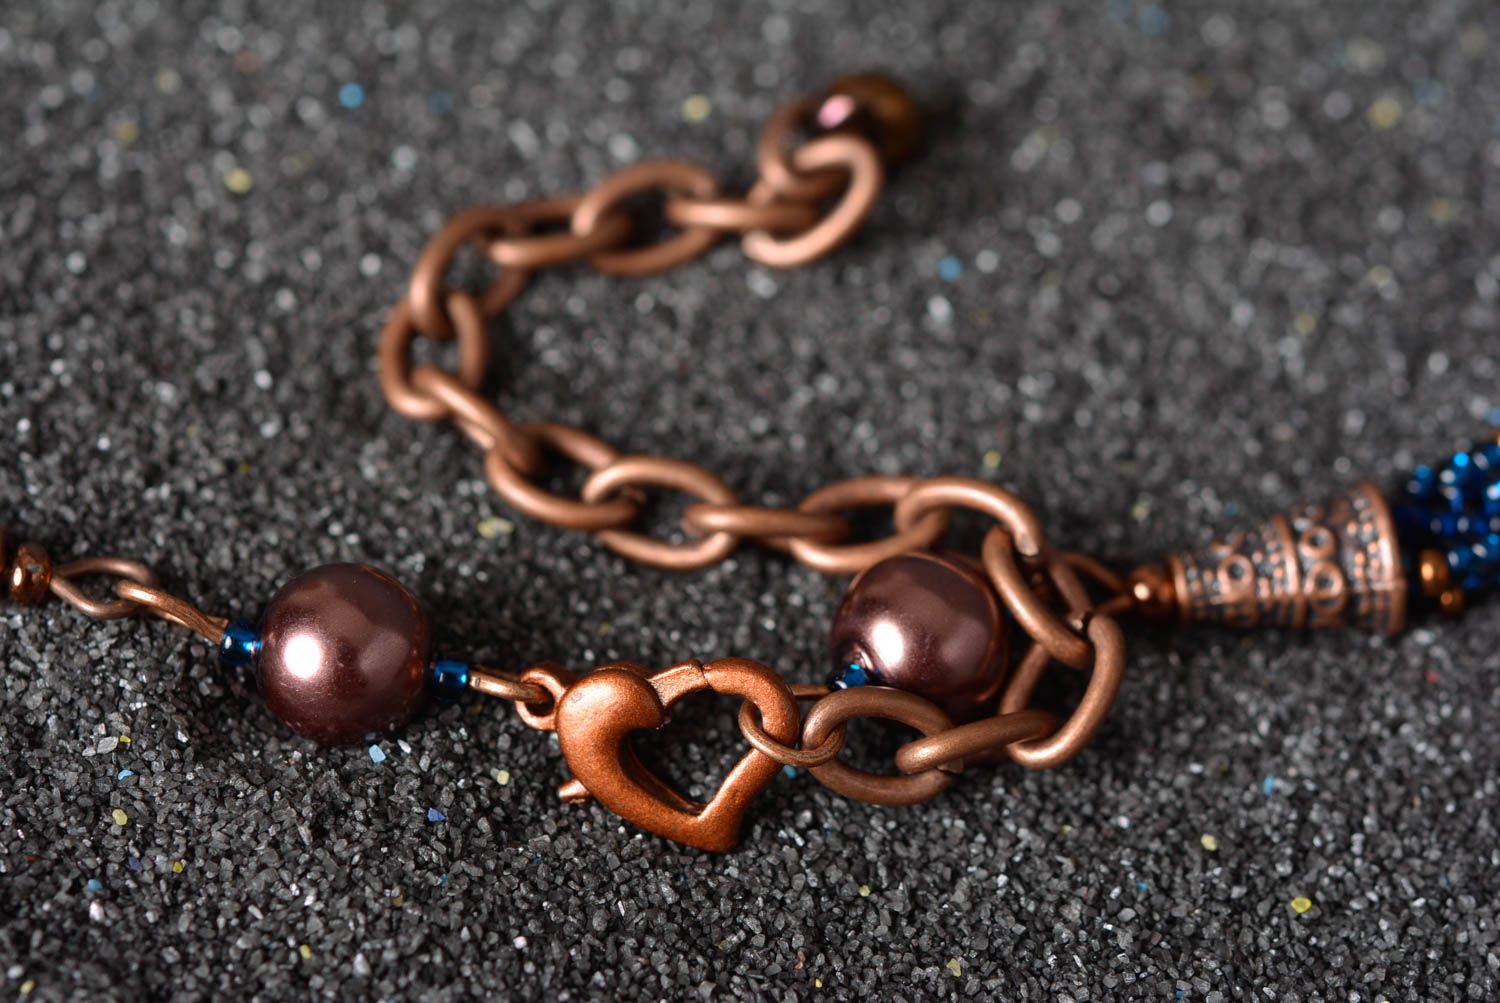 Elegant unusual necklace handmade stylish accessories beautiful jewelry photo 4